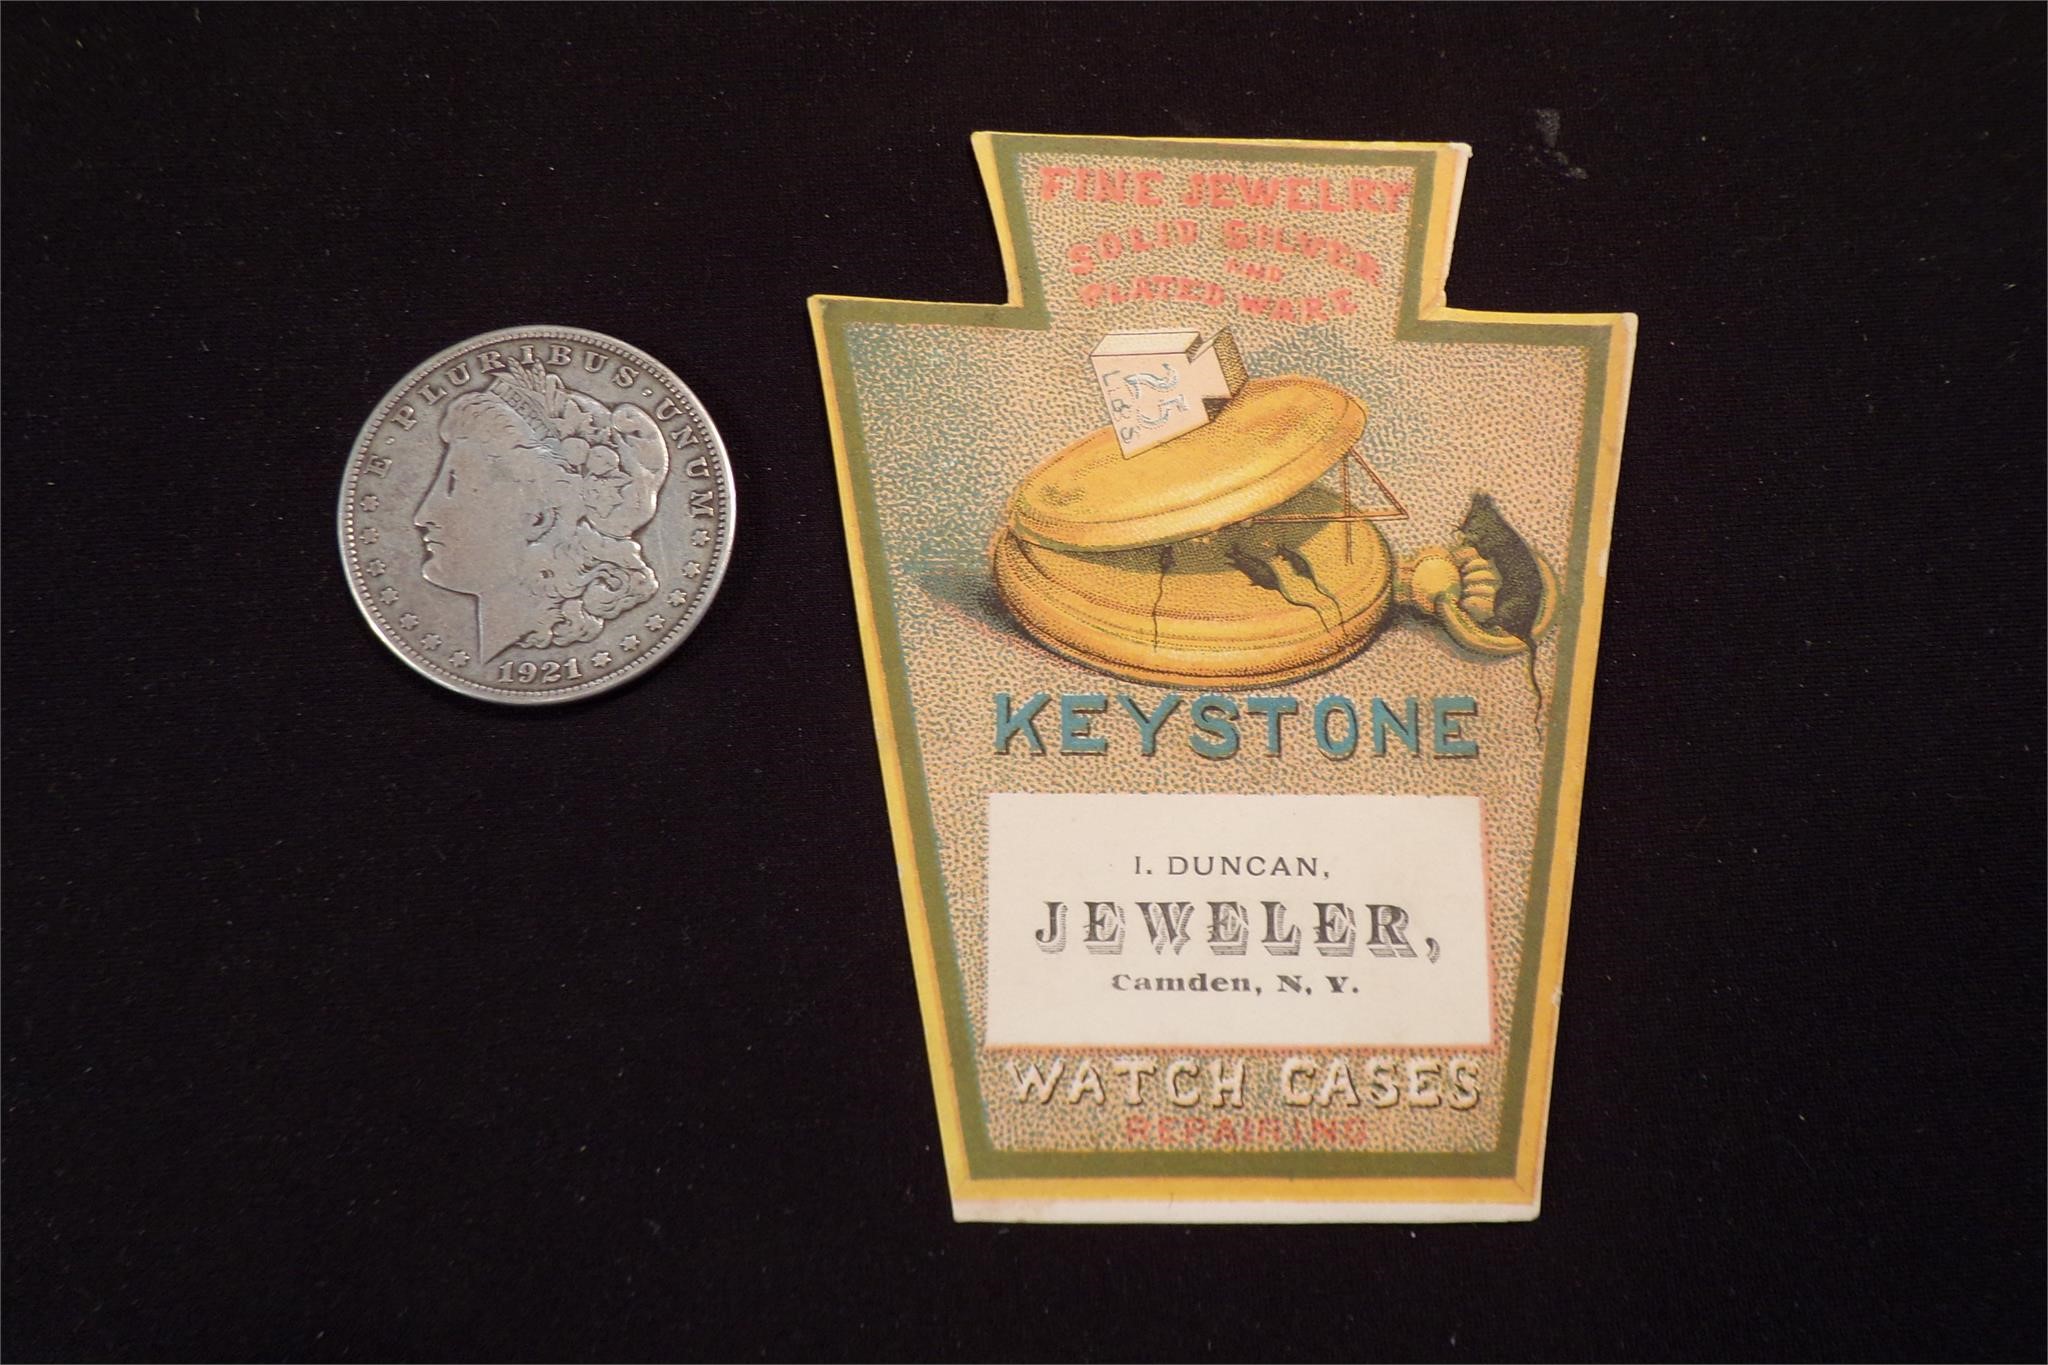 Keystone Pocket Watch Cases Victorian Trade Card